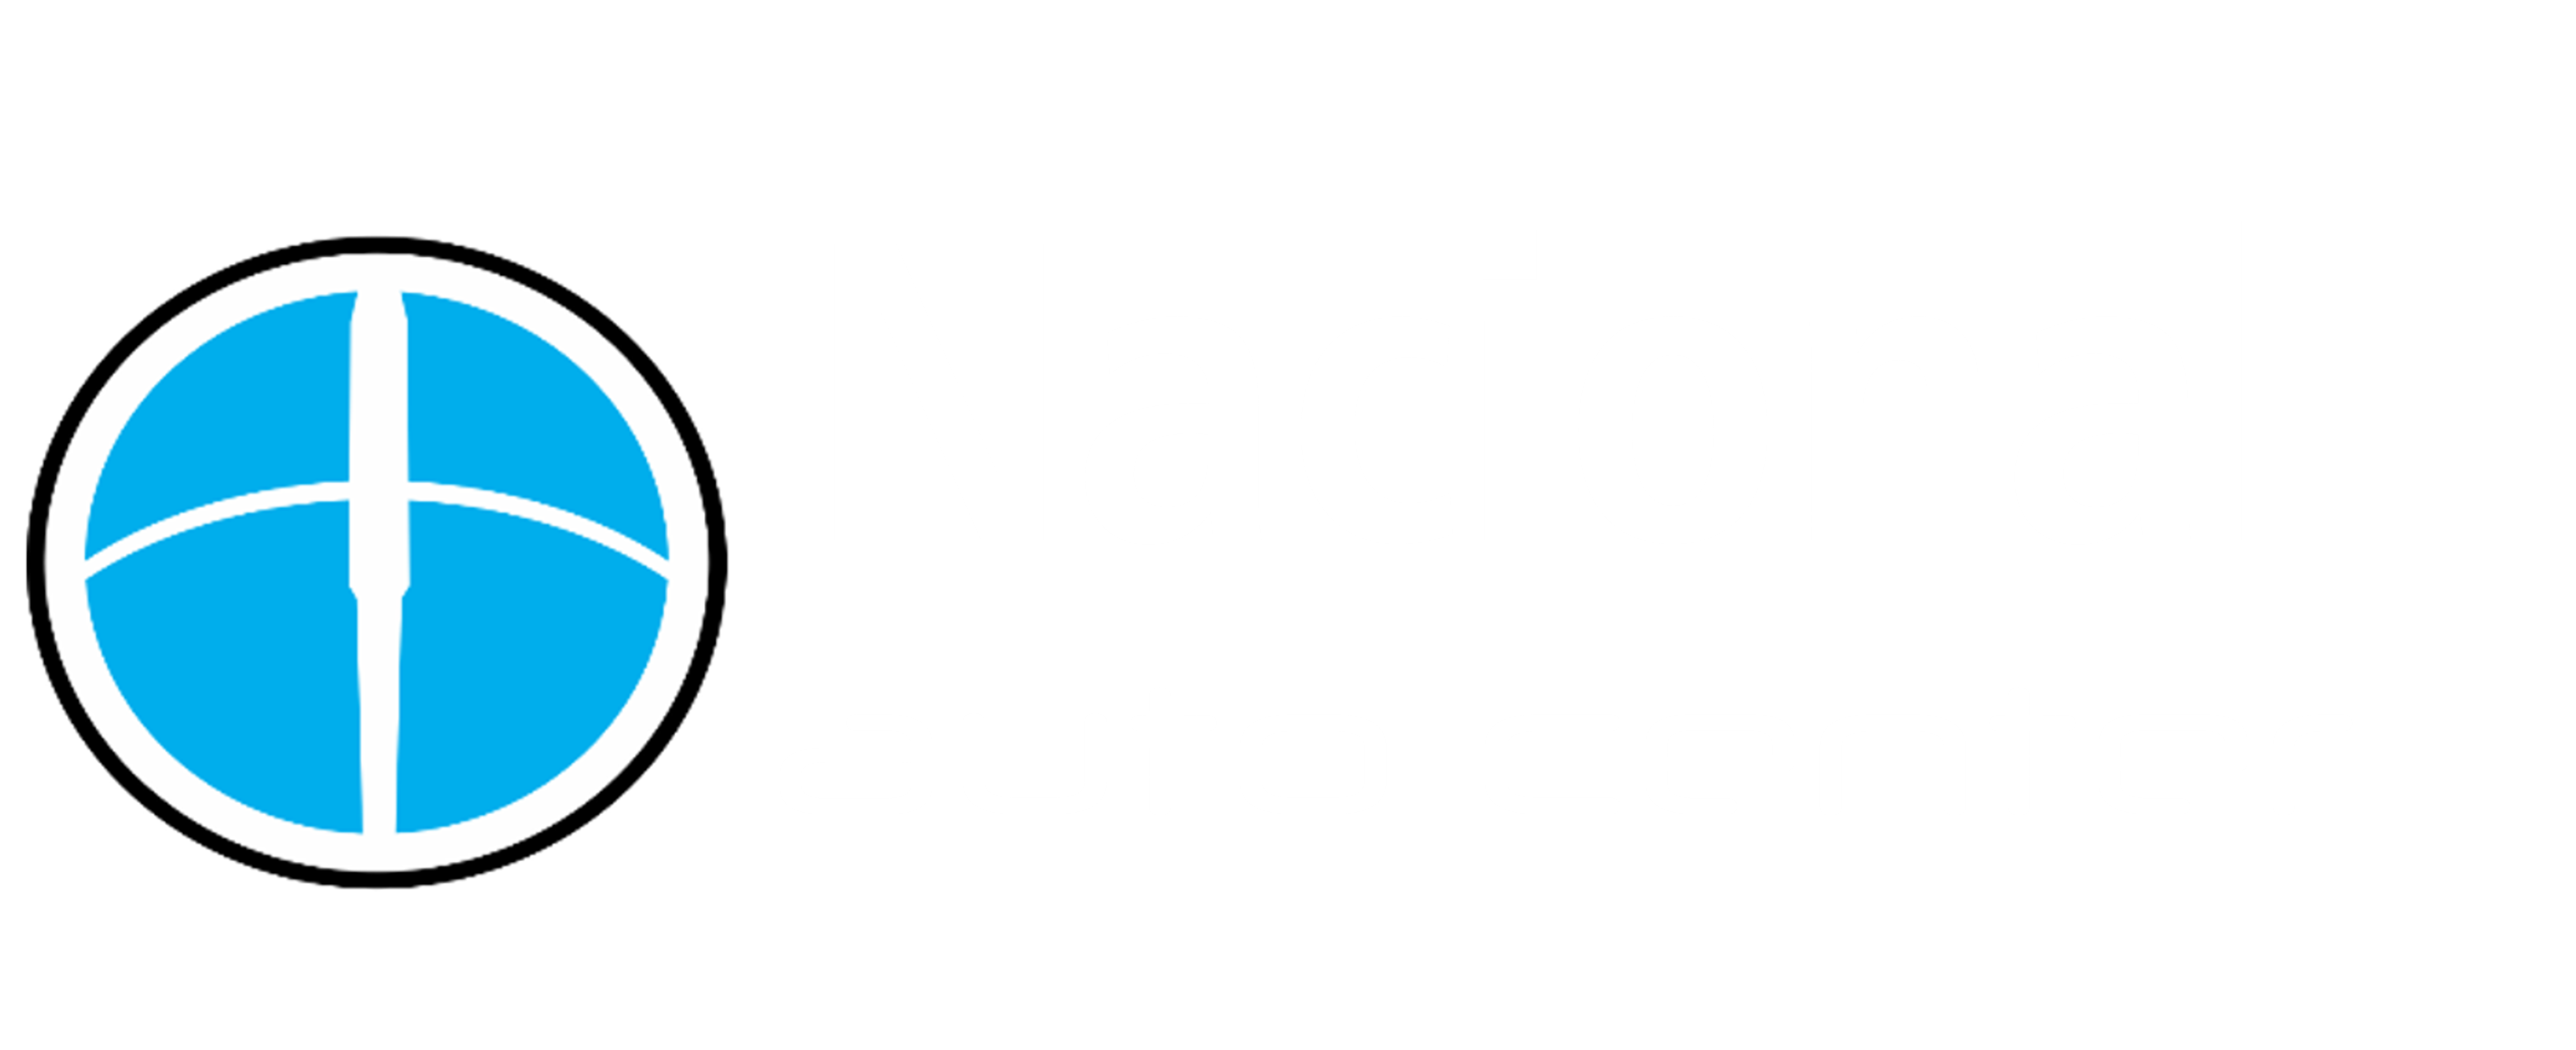 nacional auto center logo